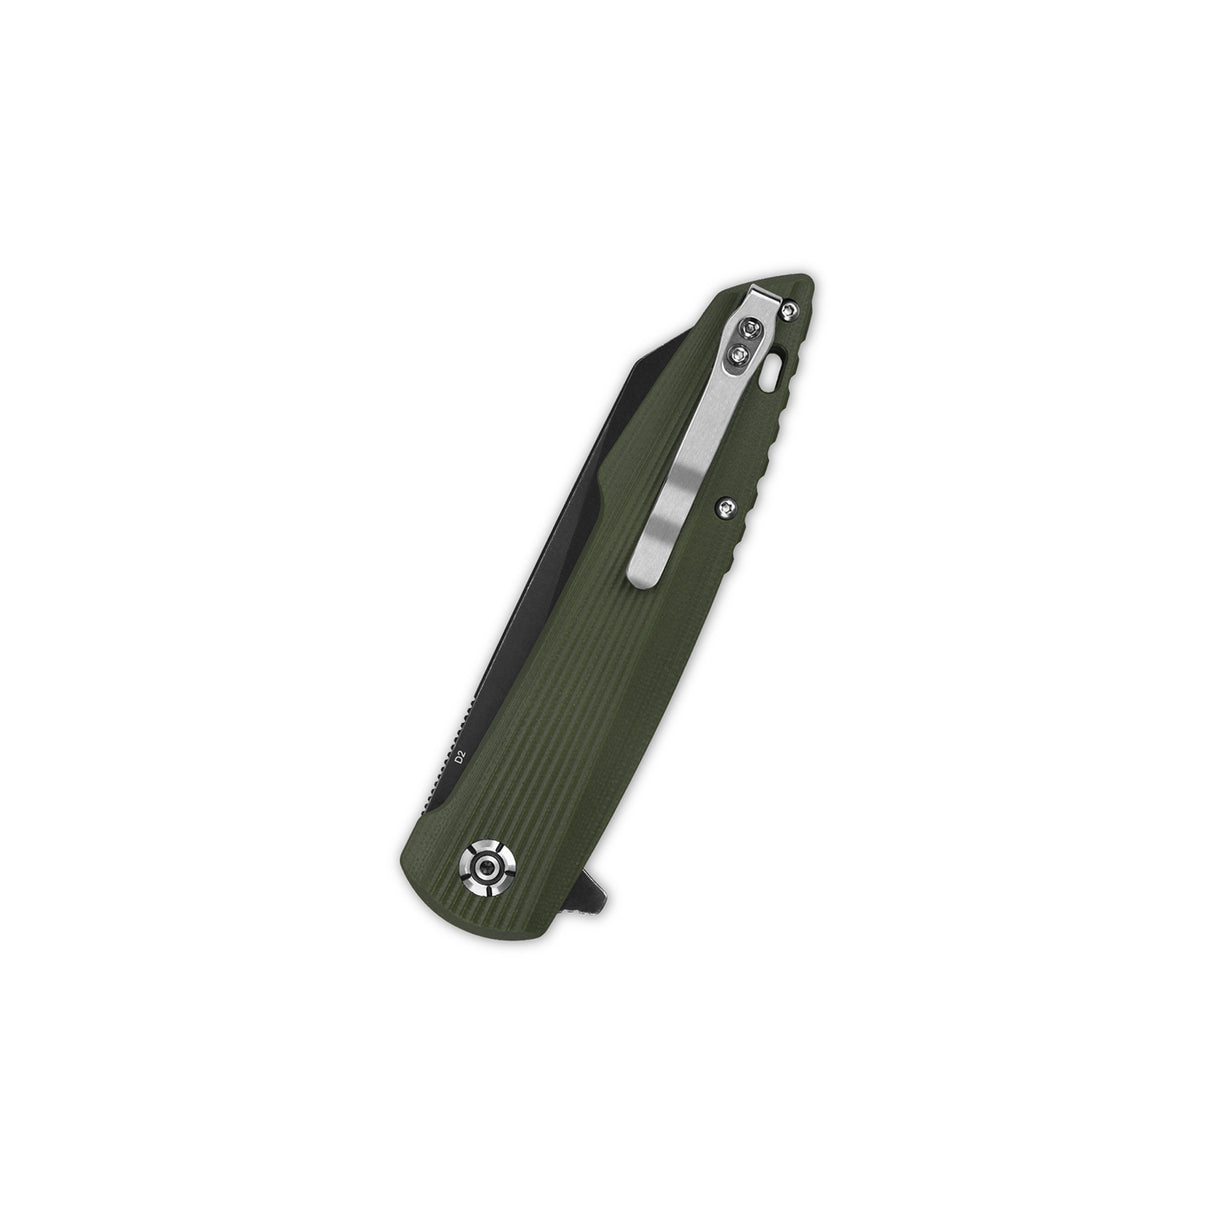 QSP Phoenix Liner Lock Pocket Knife D2 blade G10 Handle